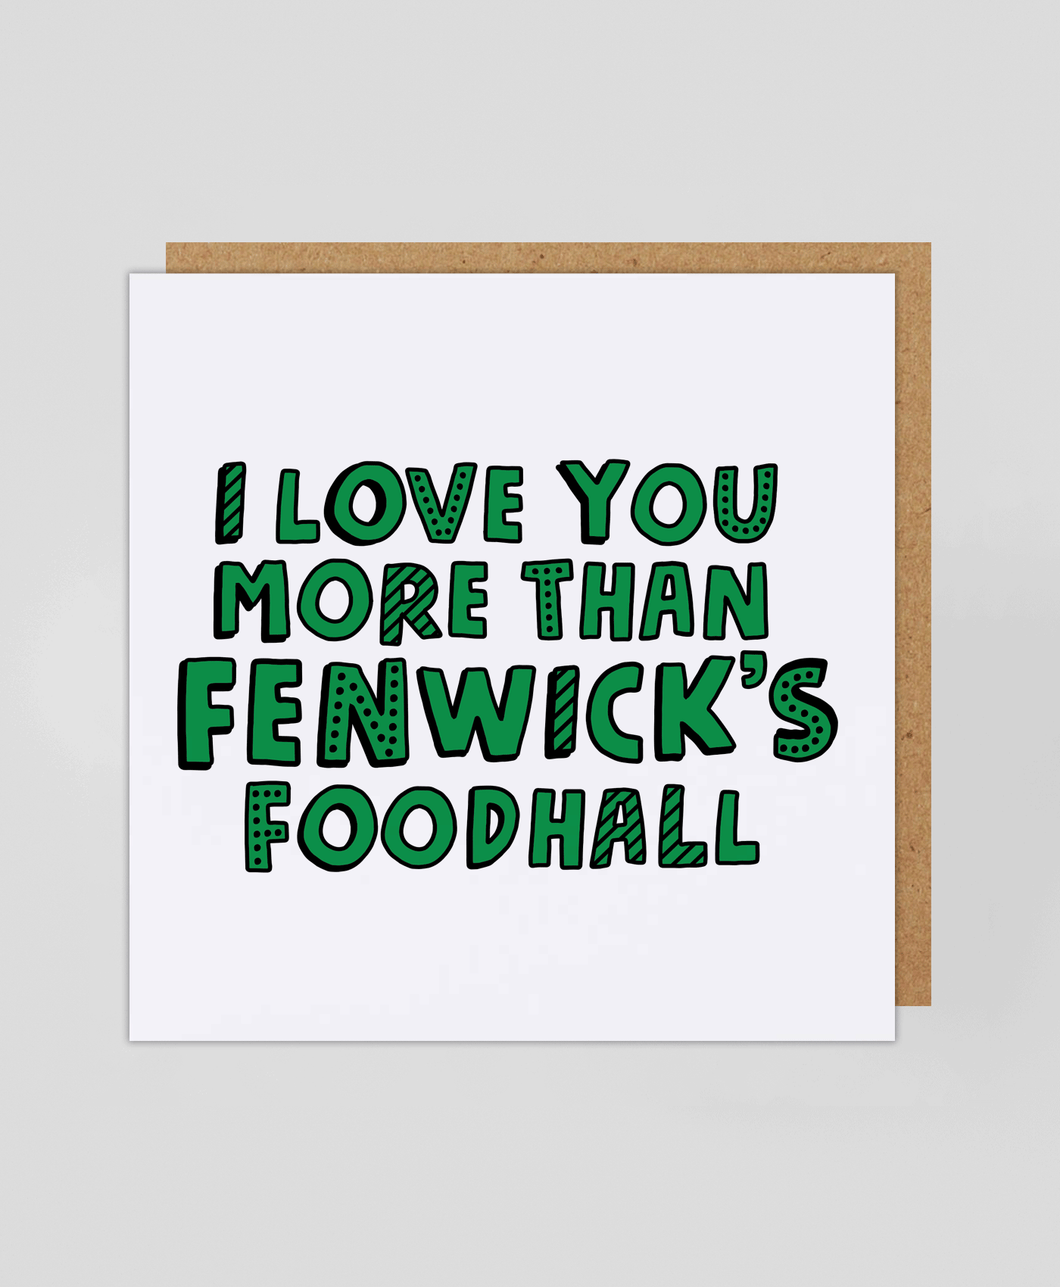 Fenwick's Foodhall - Greetings Card